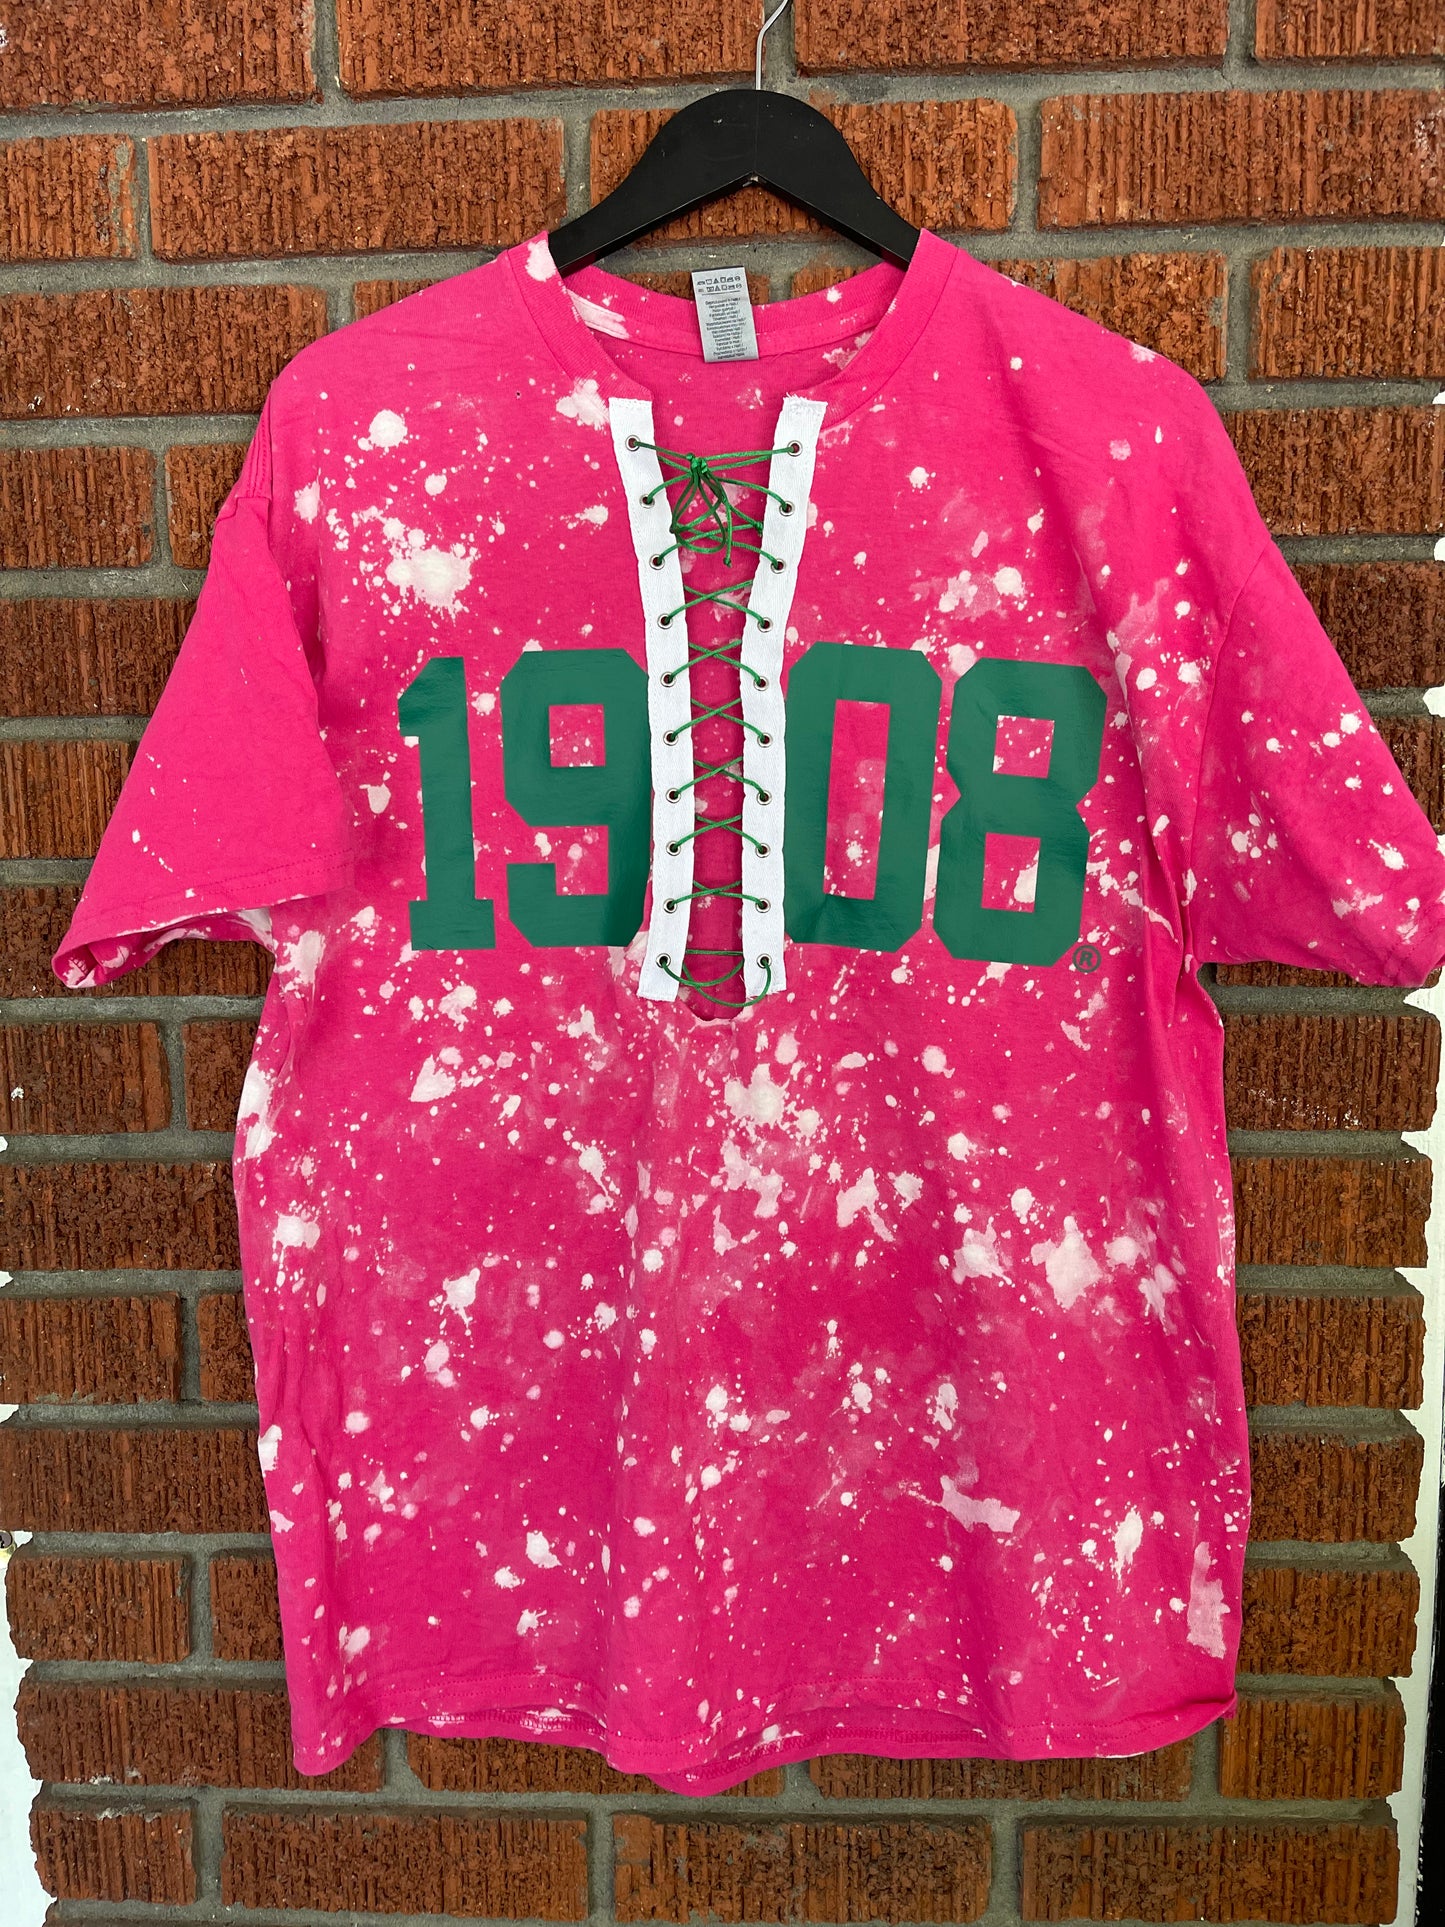 The Handmade 1908 Lace Up T-Shirt - [CCL Designs] - AKA Alpha Kappa Alpha Pink and Green handmade hand bleach tie dye